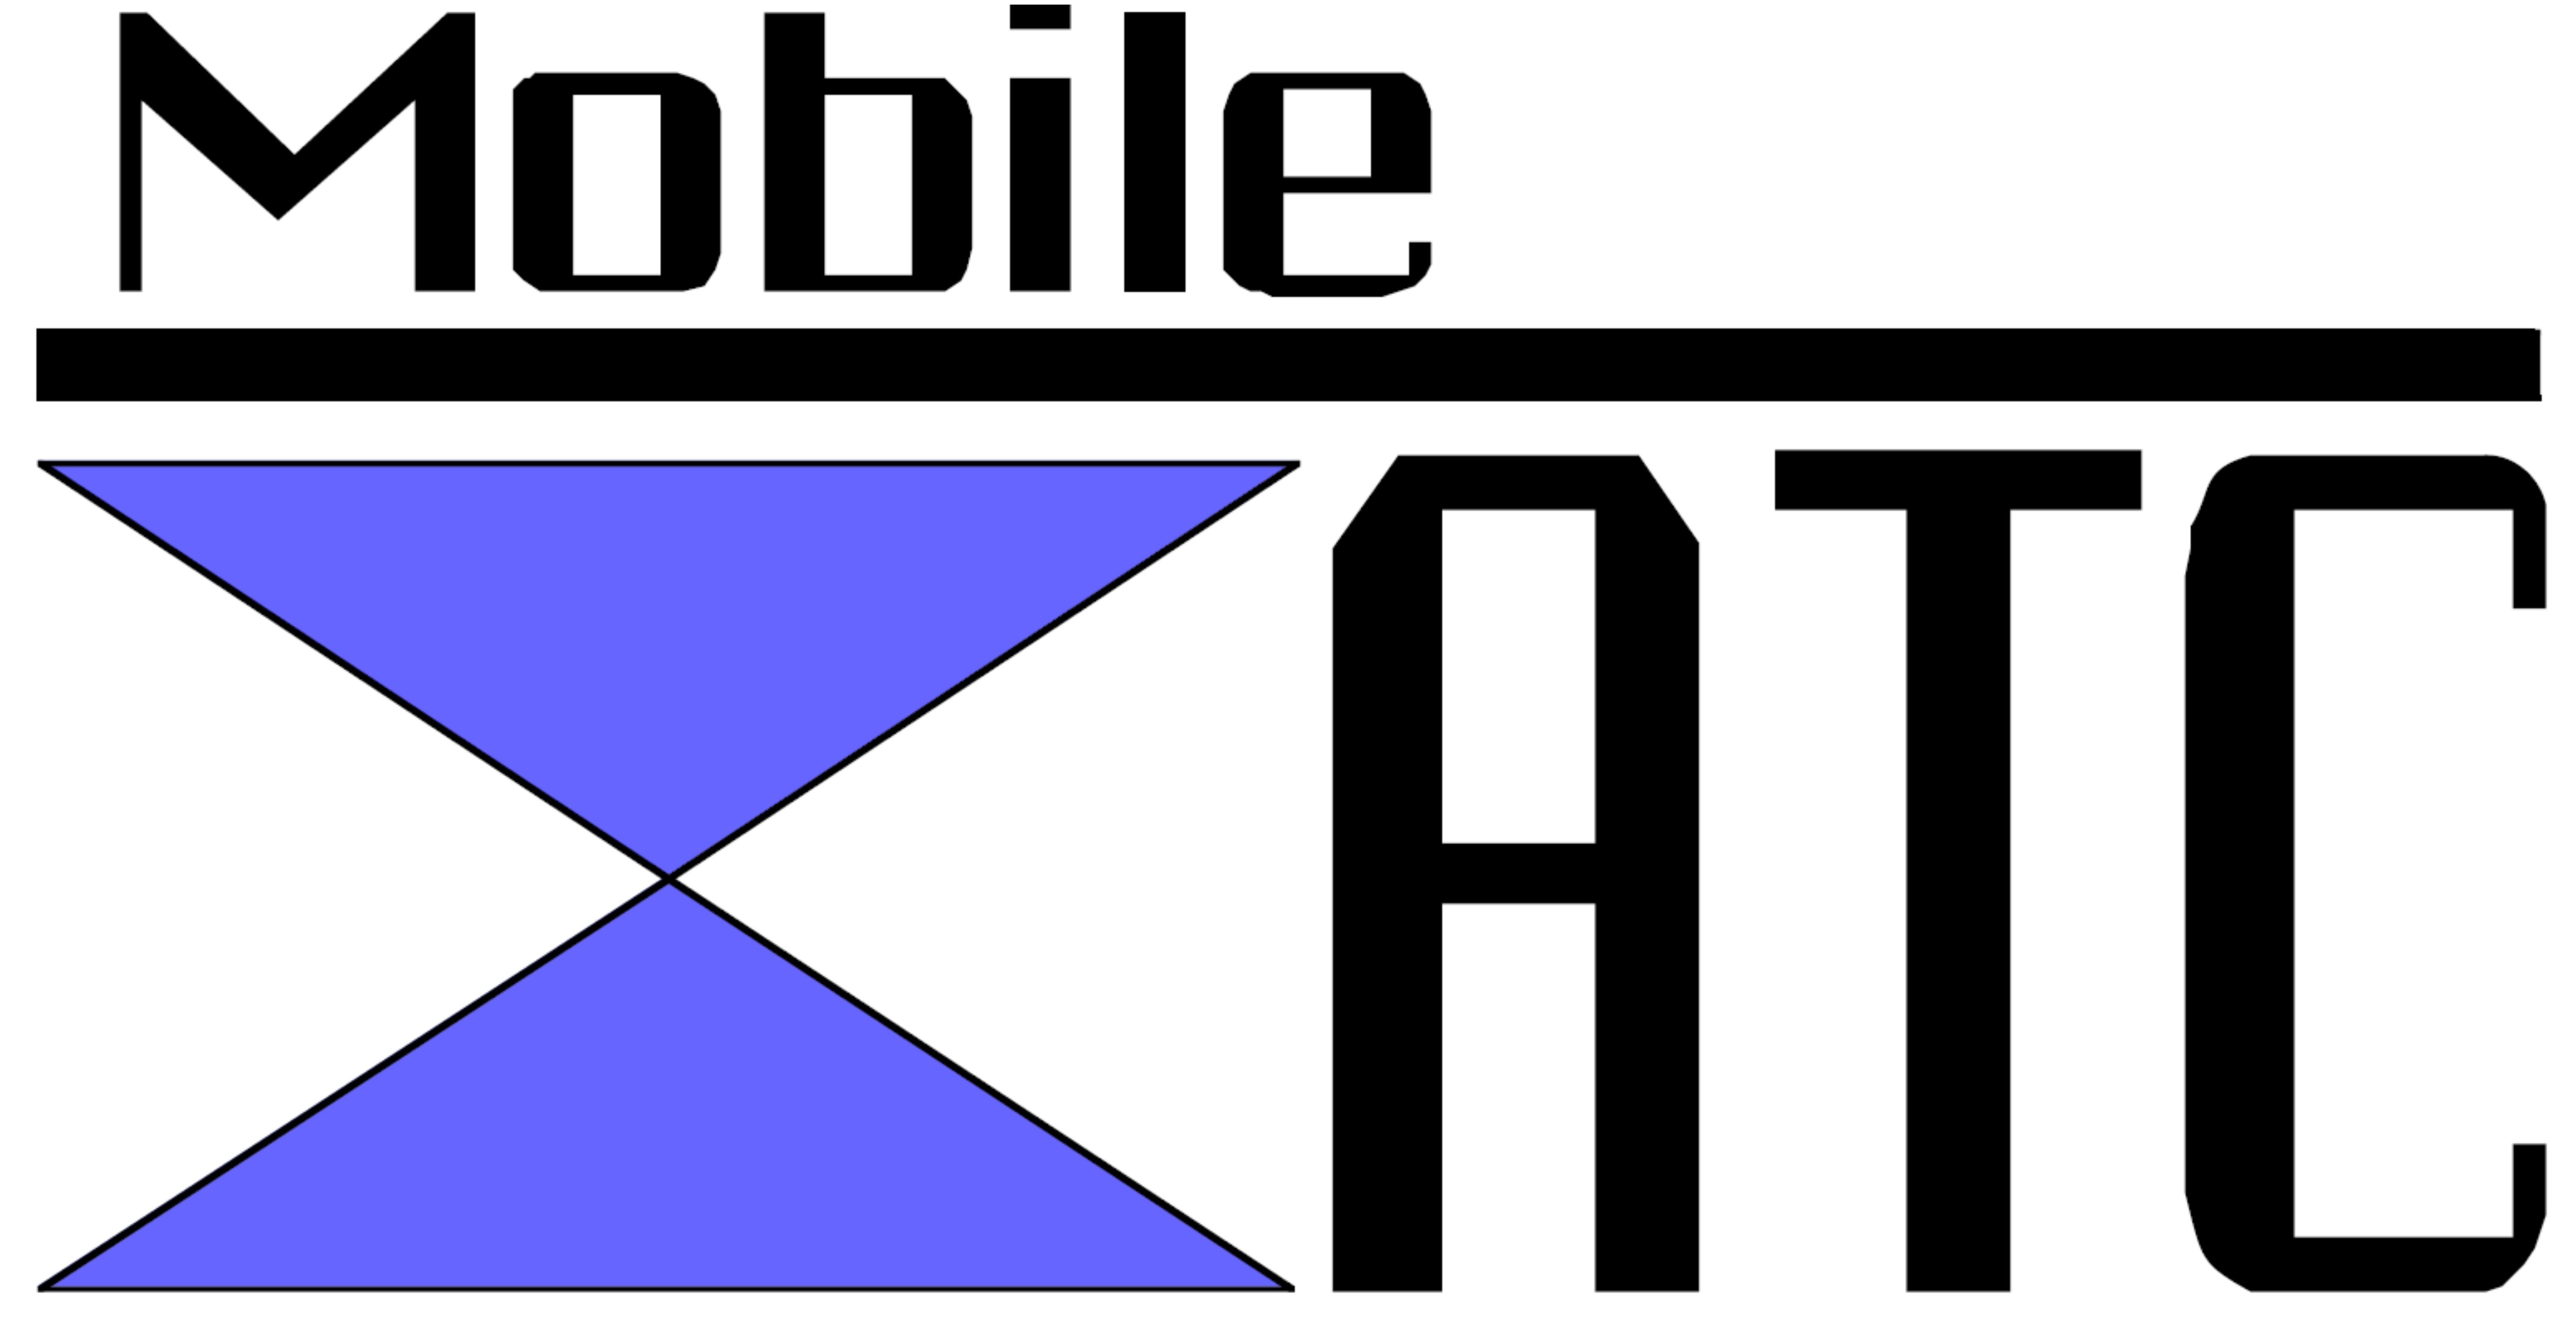 Mobile ATC Systems Ltd